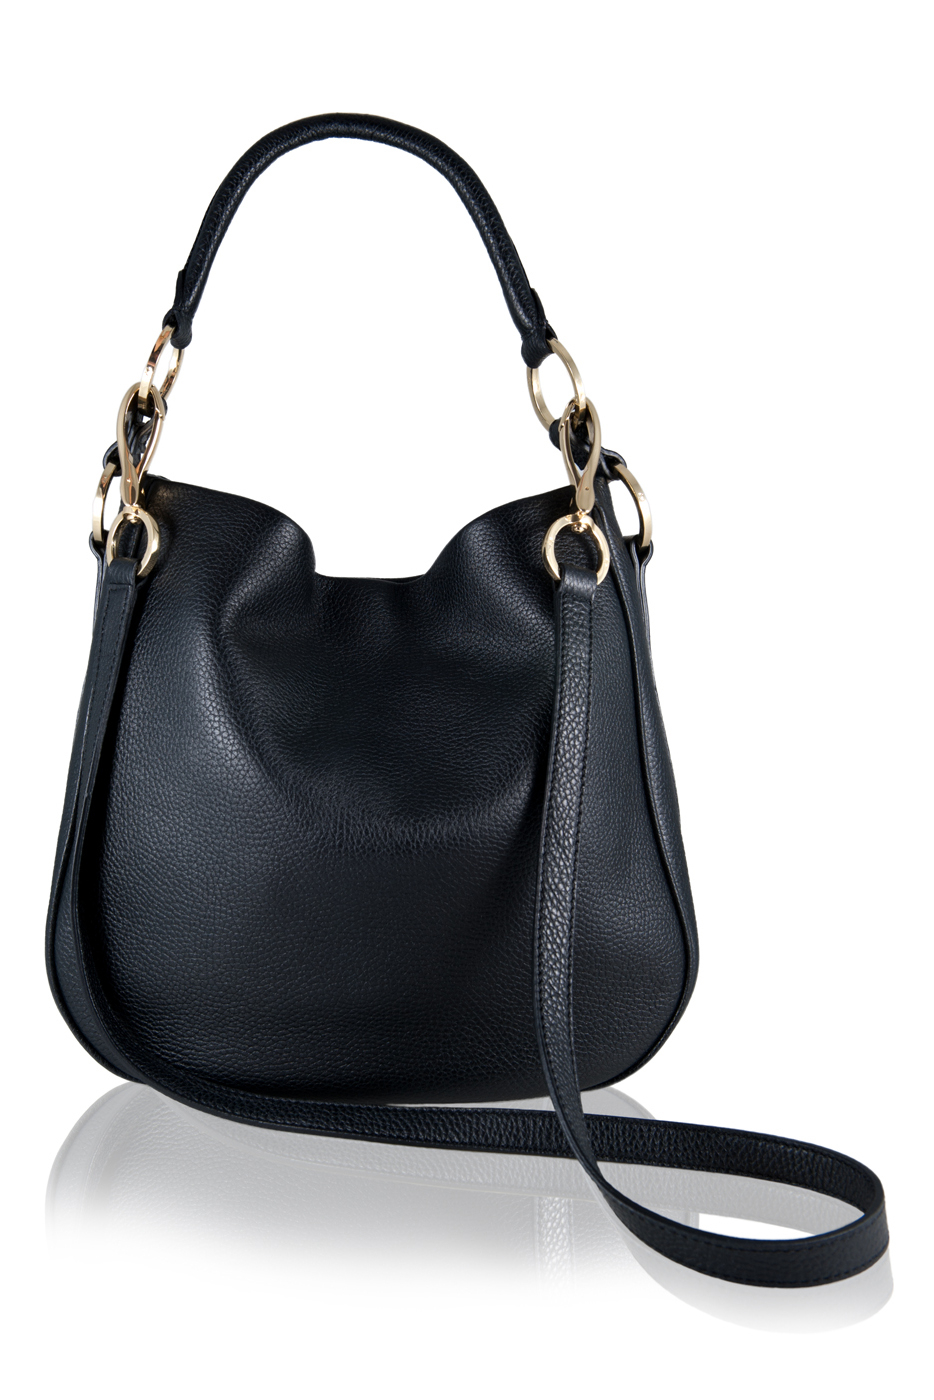 Amanda wakeley Layla Large Leather Hobo Bag in Black | Lyst